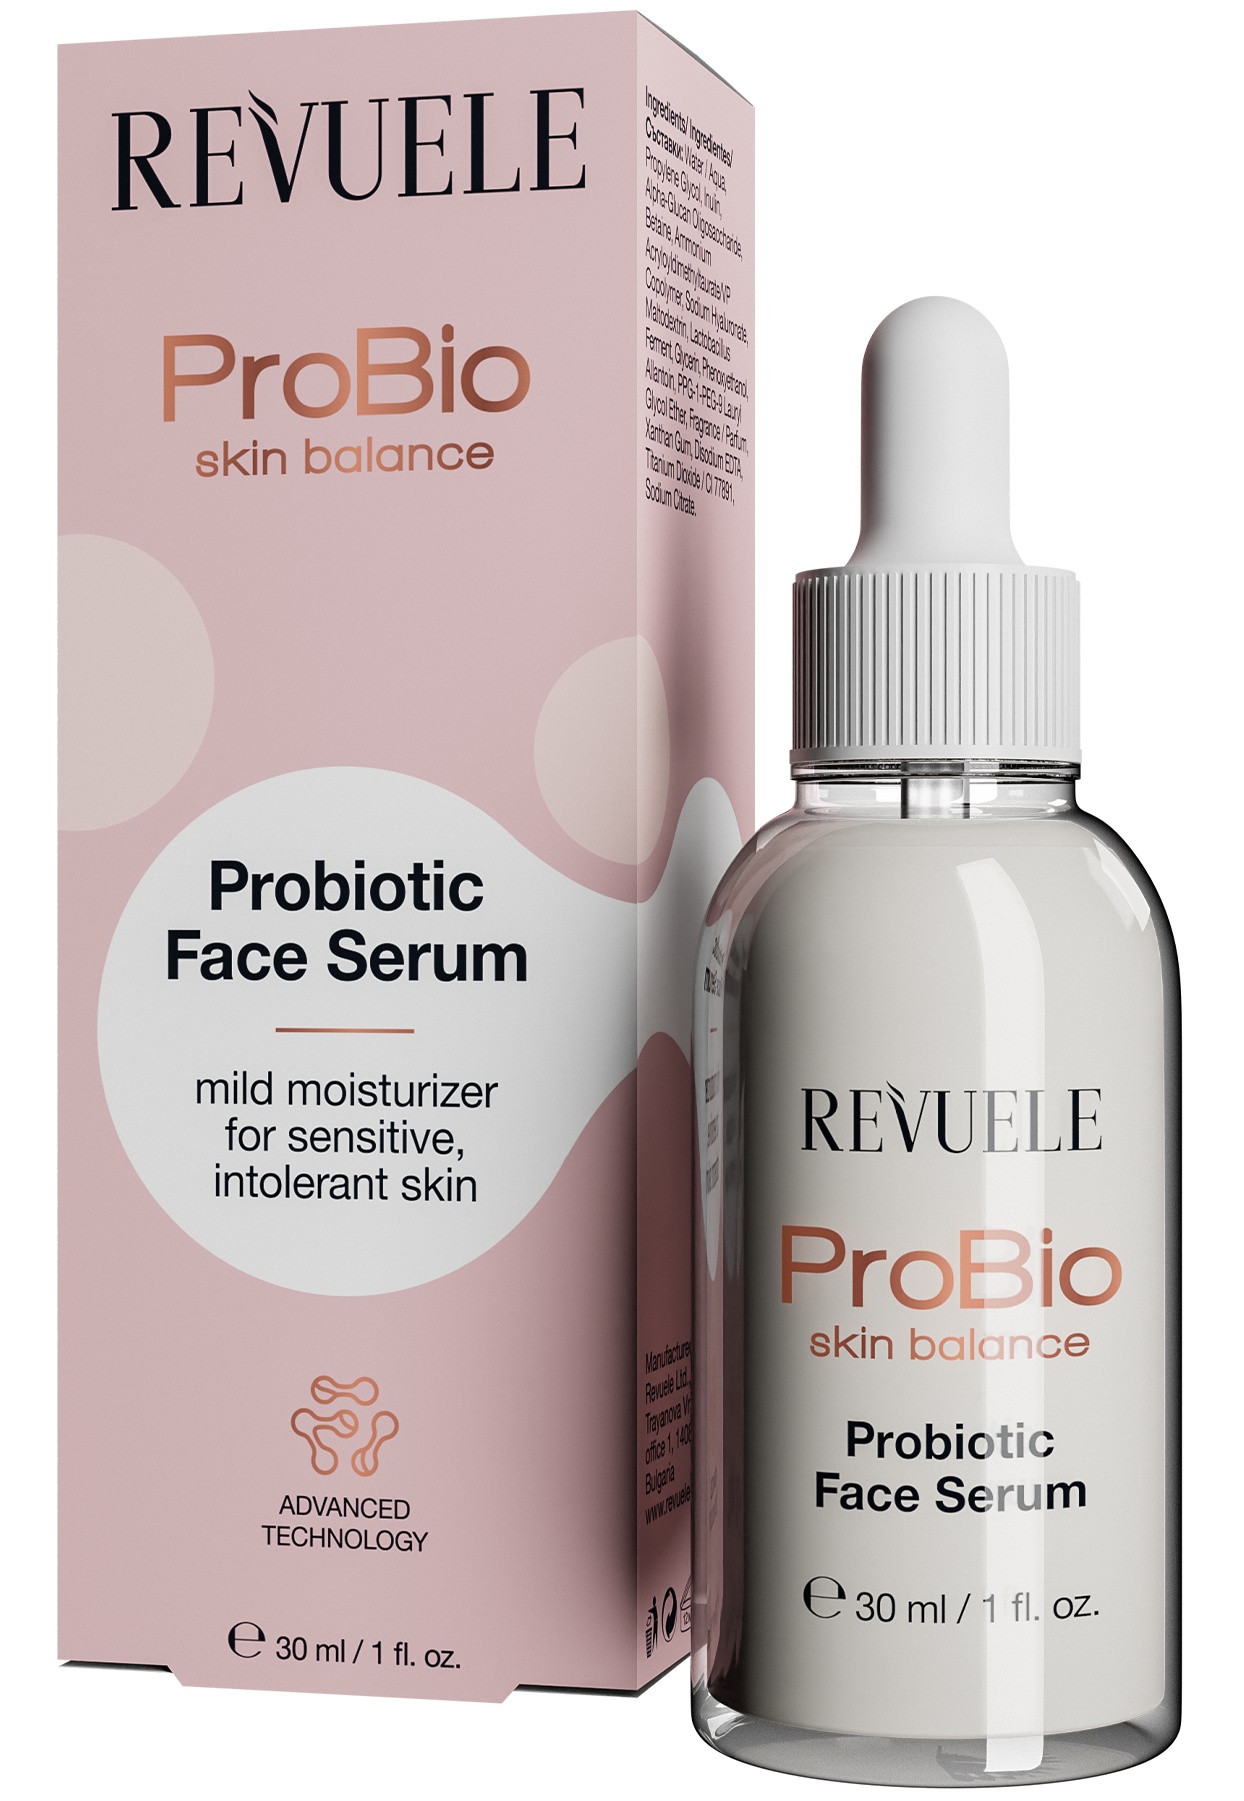 Revuele ProBio Skin Balance Probiotic Face Serum